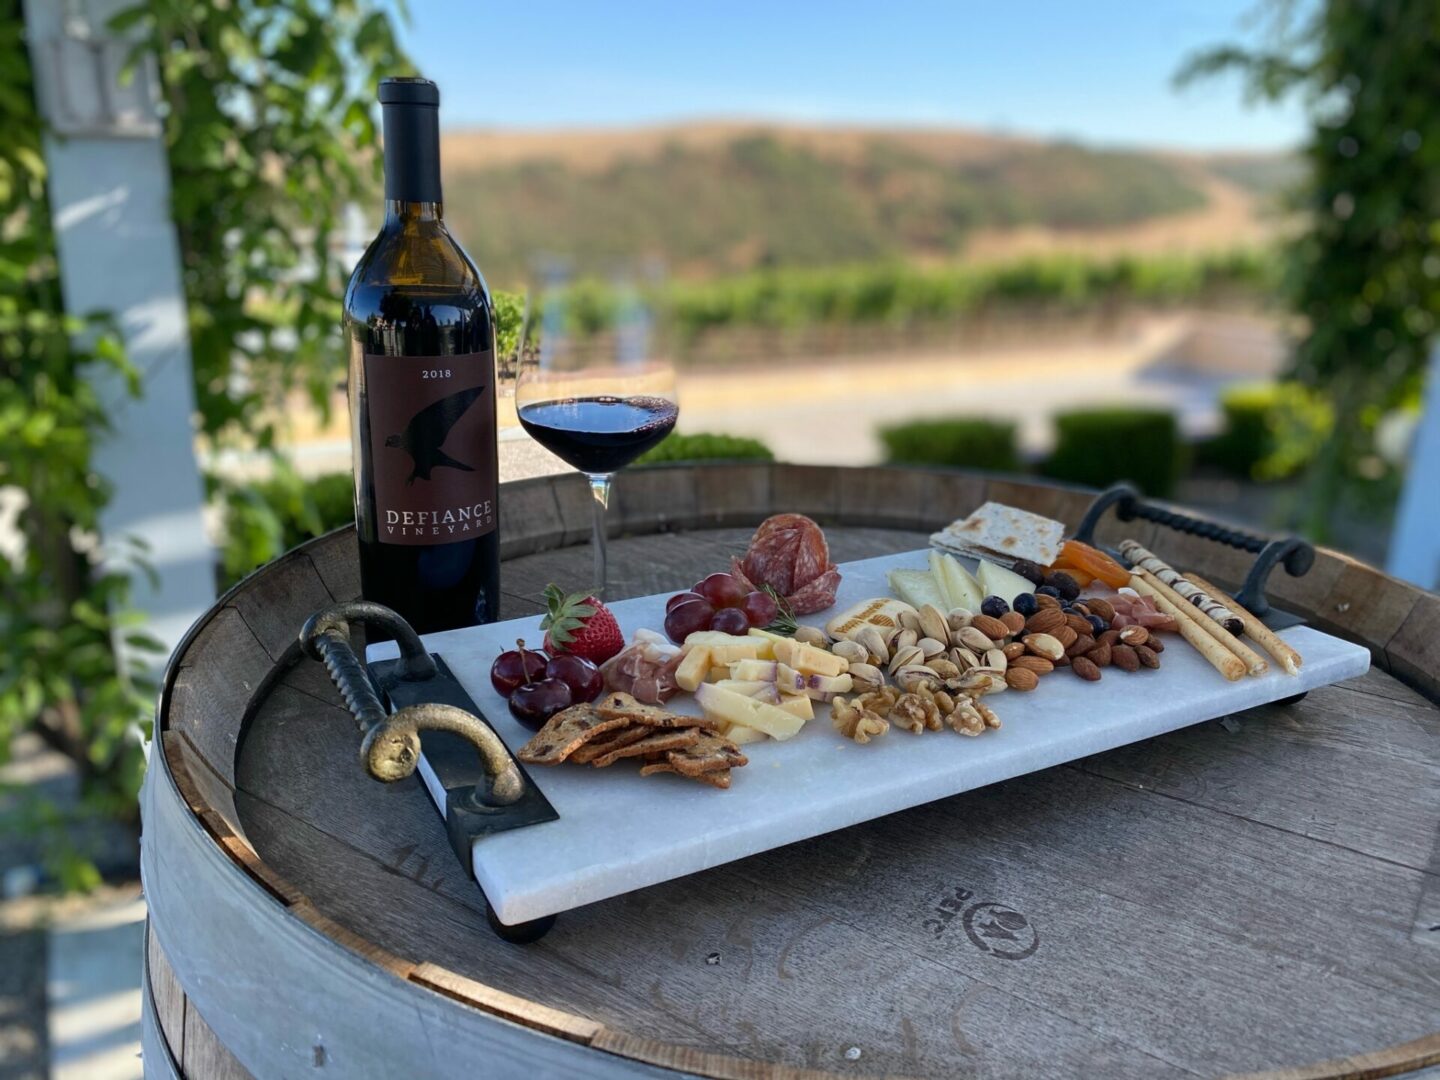 Wine and cheese platter overlooking vineyard